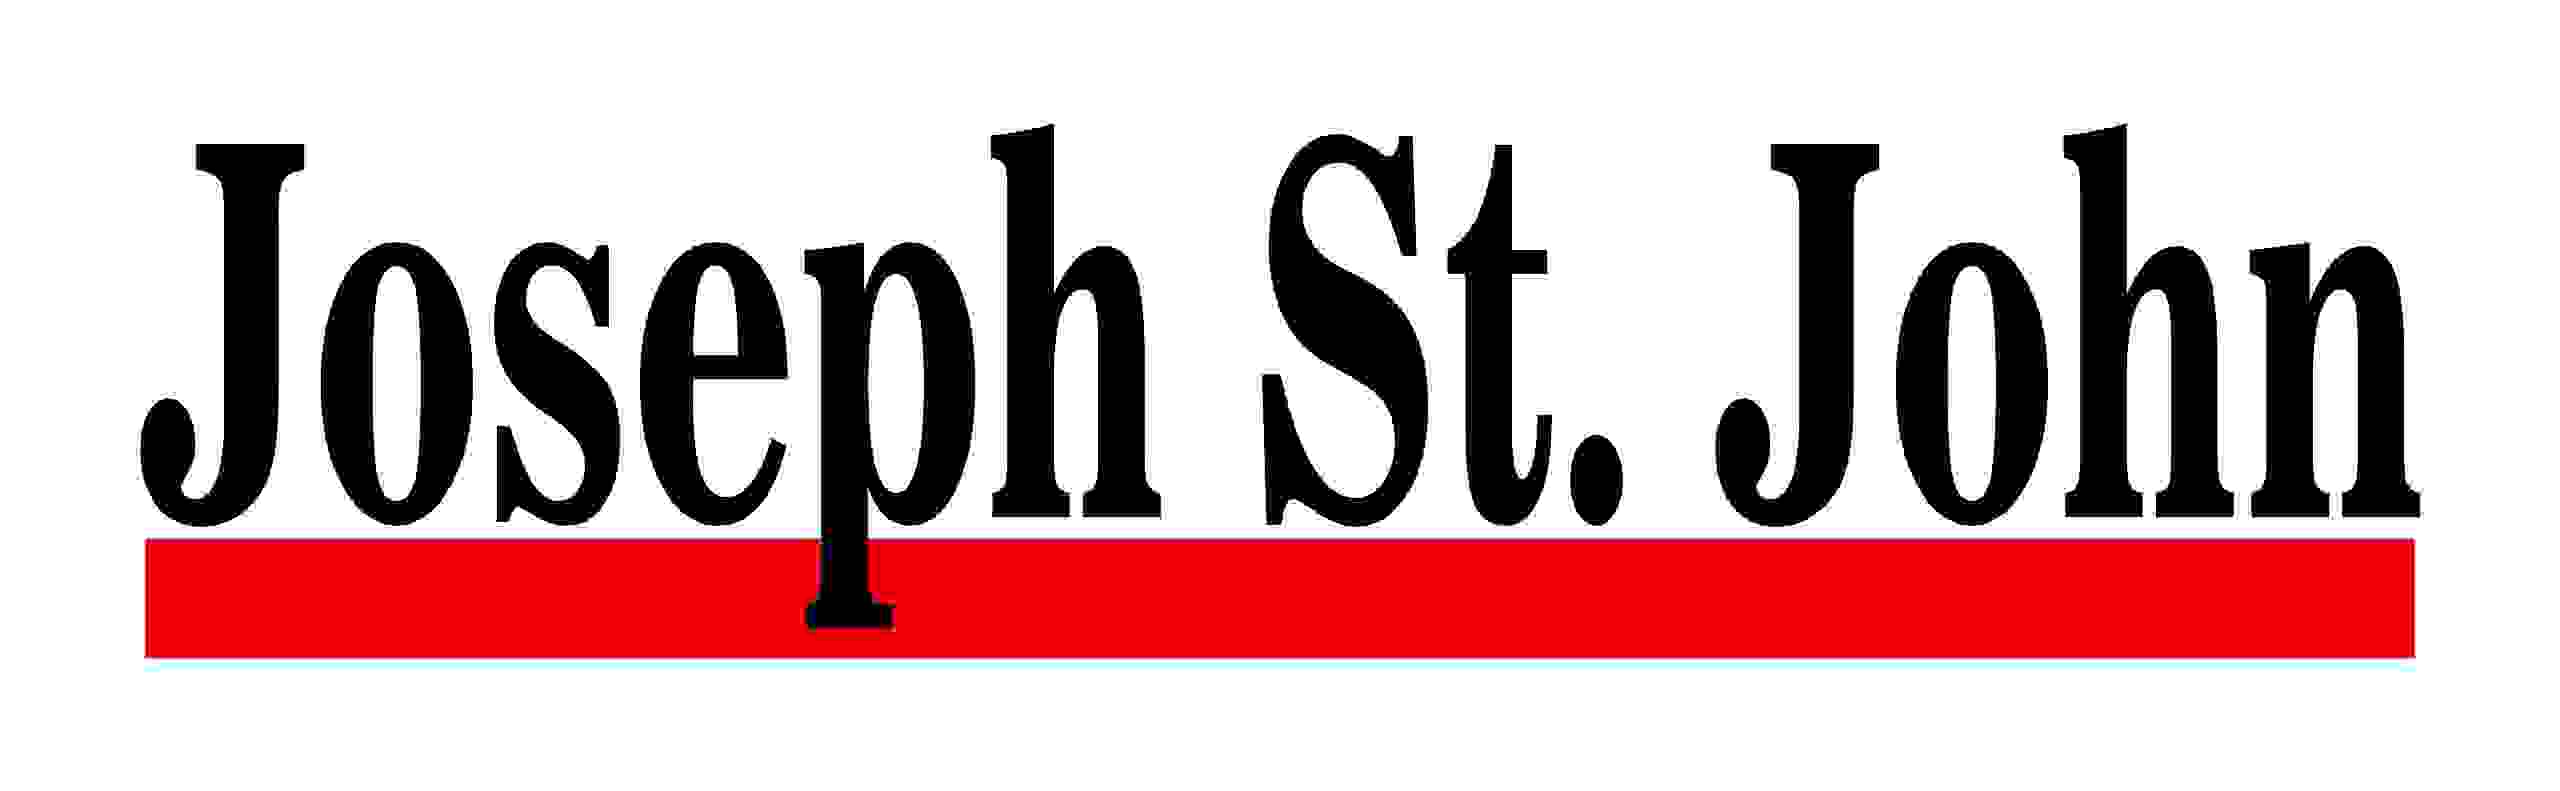 Joseph St. John's name logo, 711 Records, Singer-Songwriter, Country, Outlaw, Alt.-Country, Texas